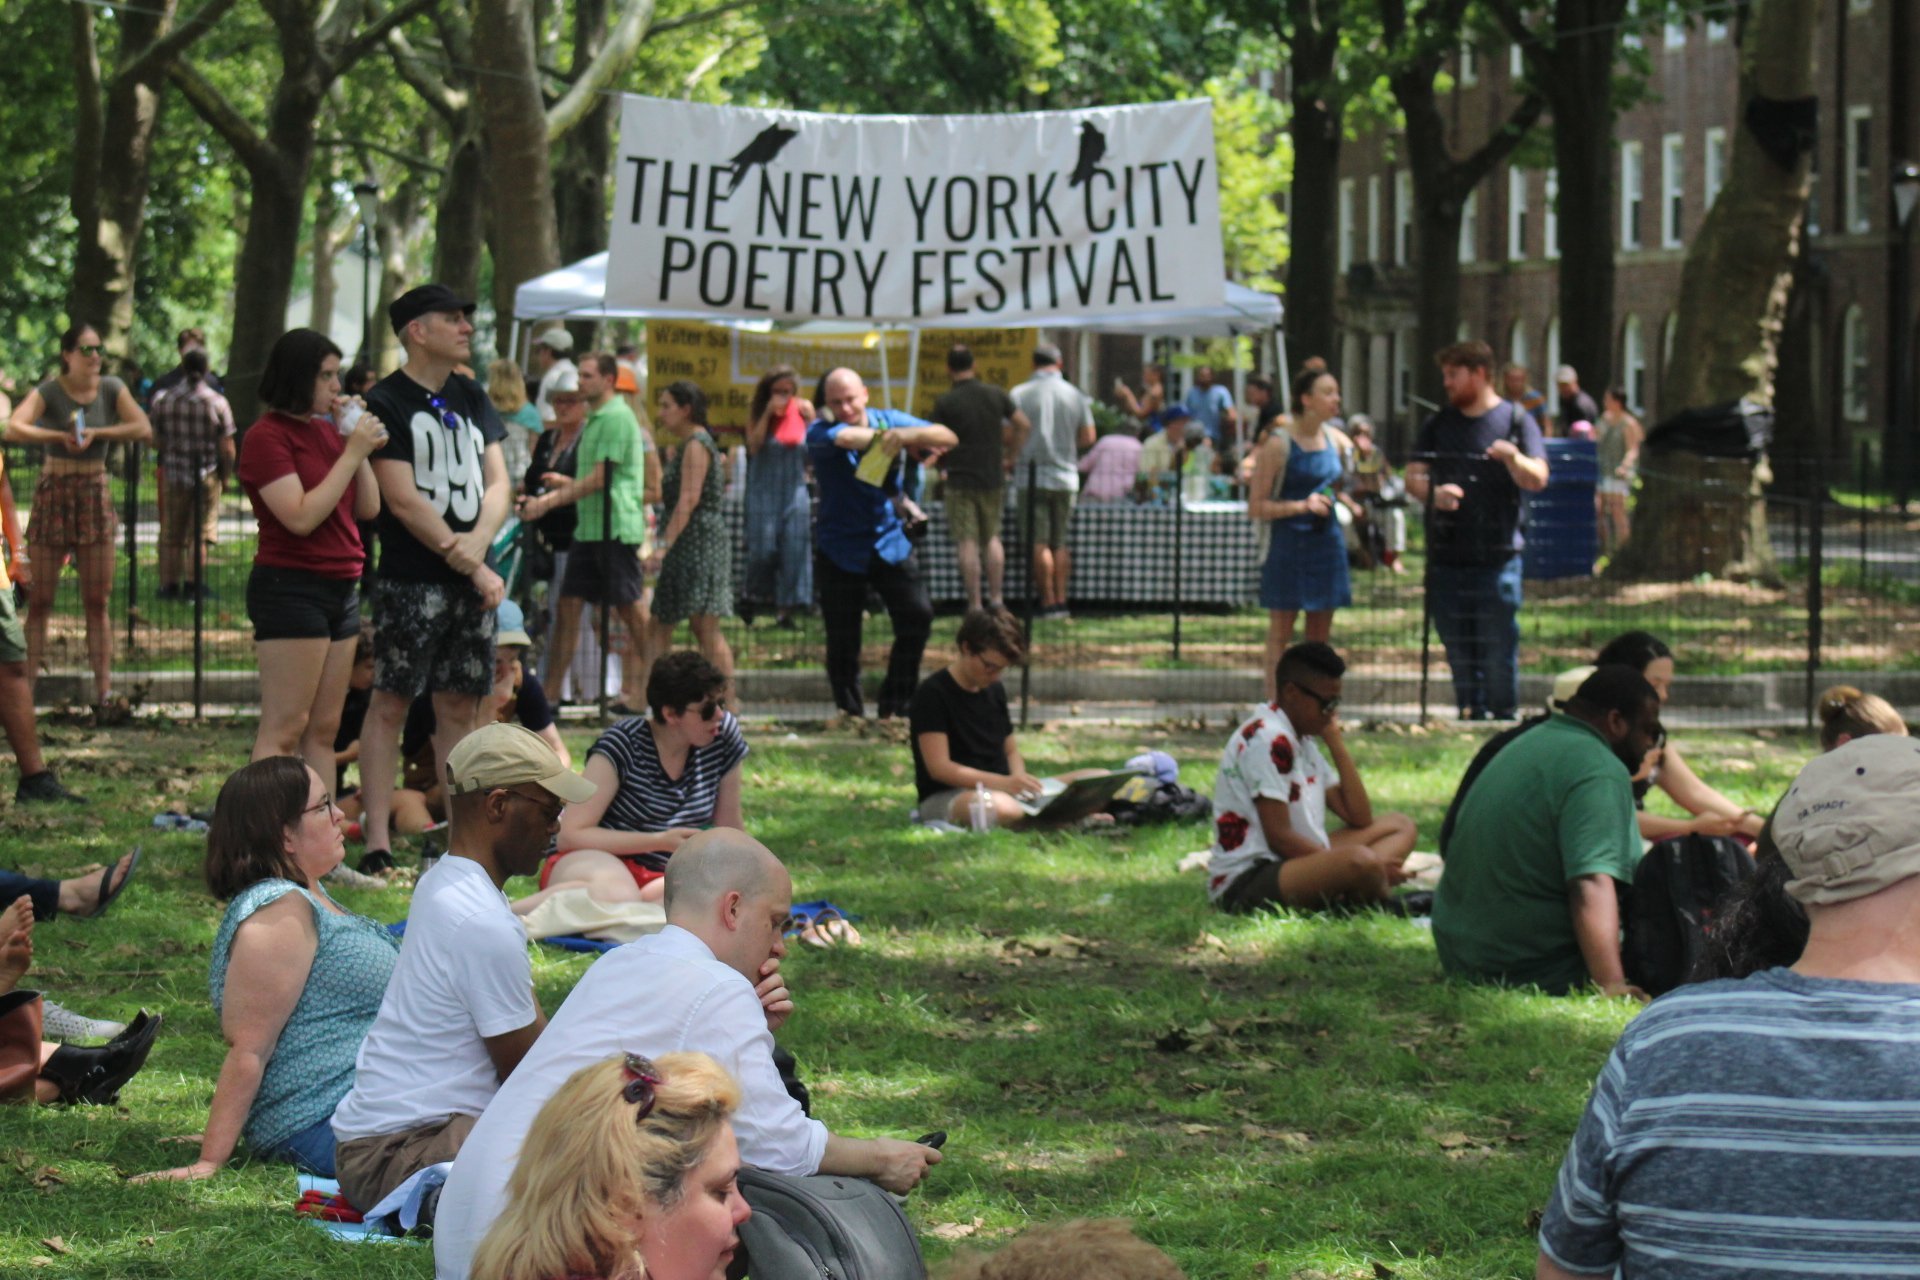 The New York City Poetry Festival